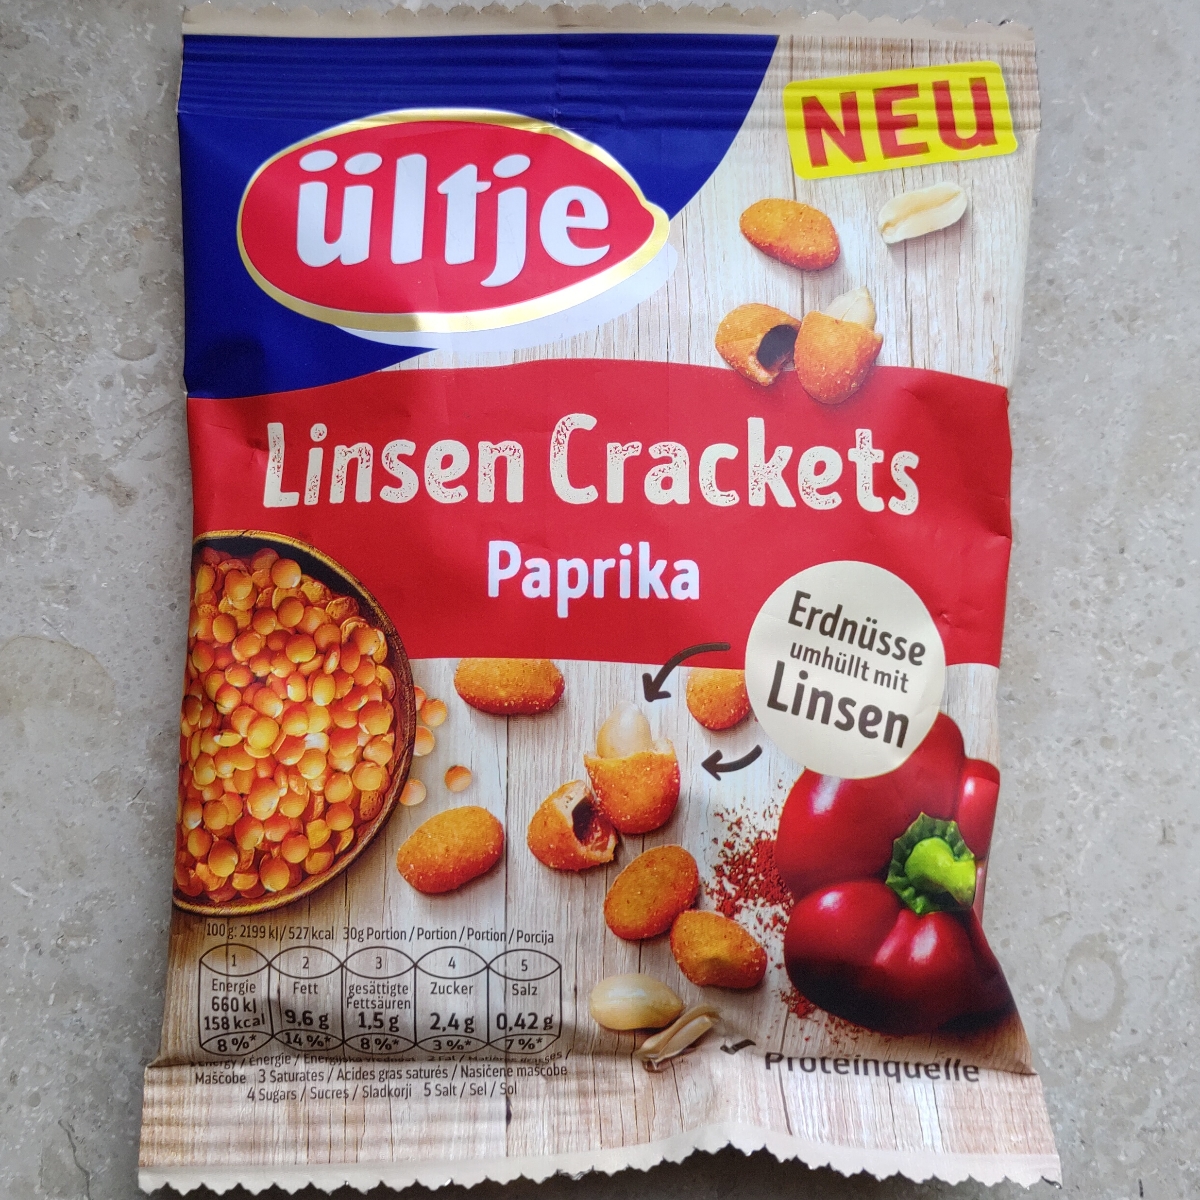 Ültje Linsen Crackets Paprika Reviews